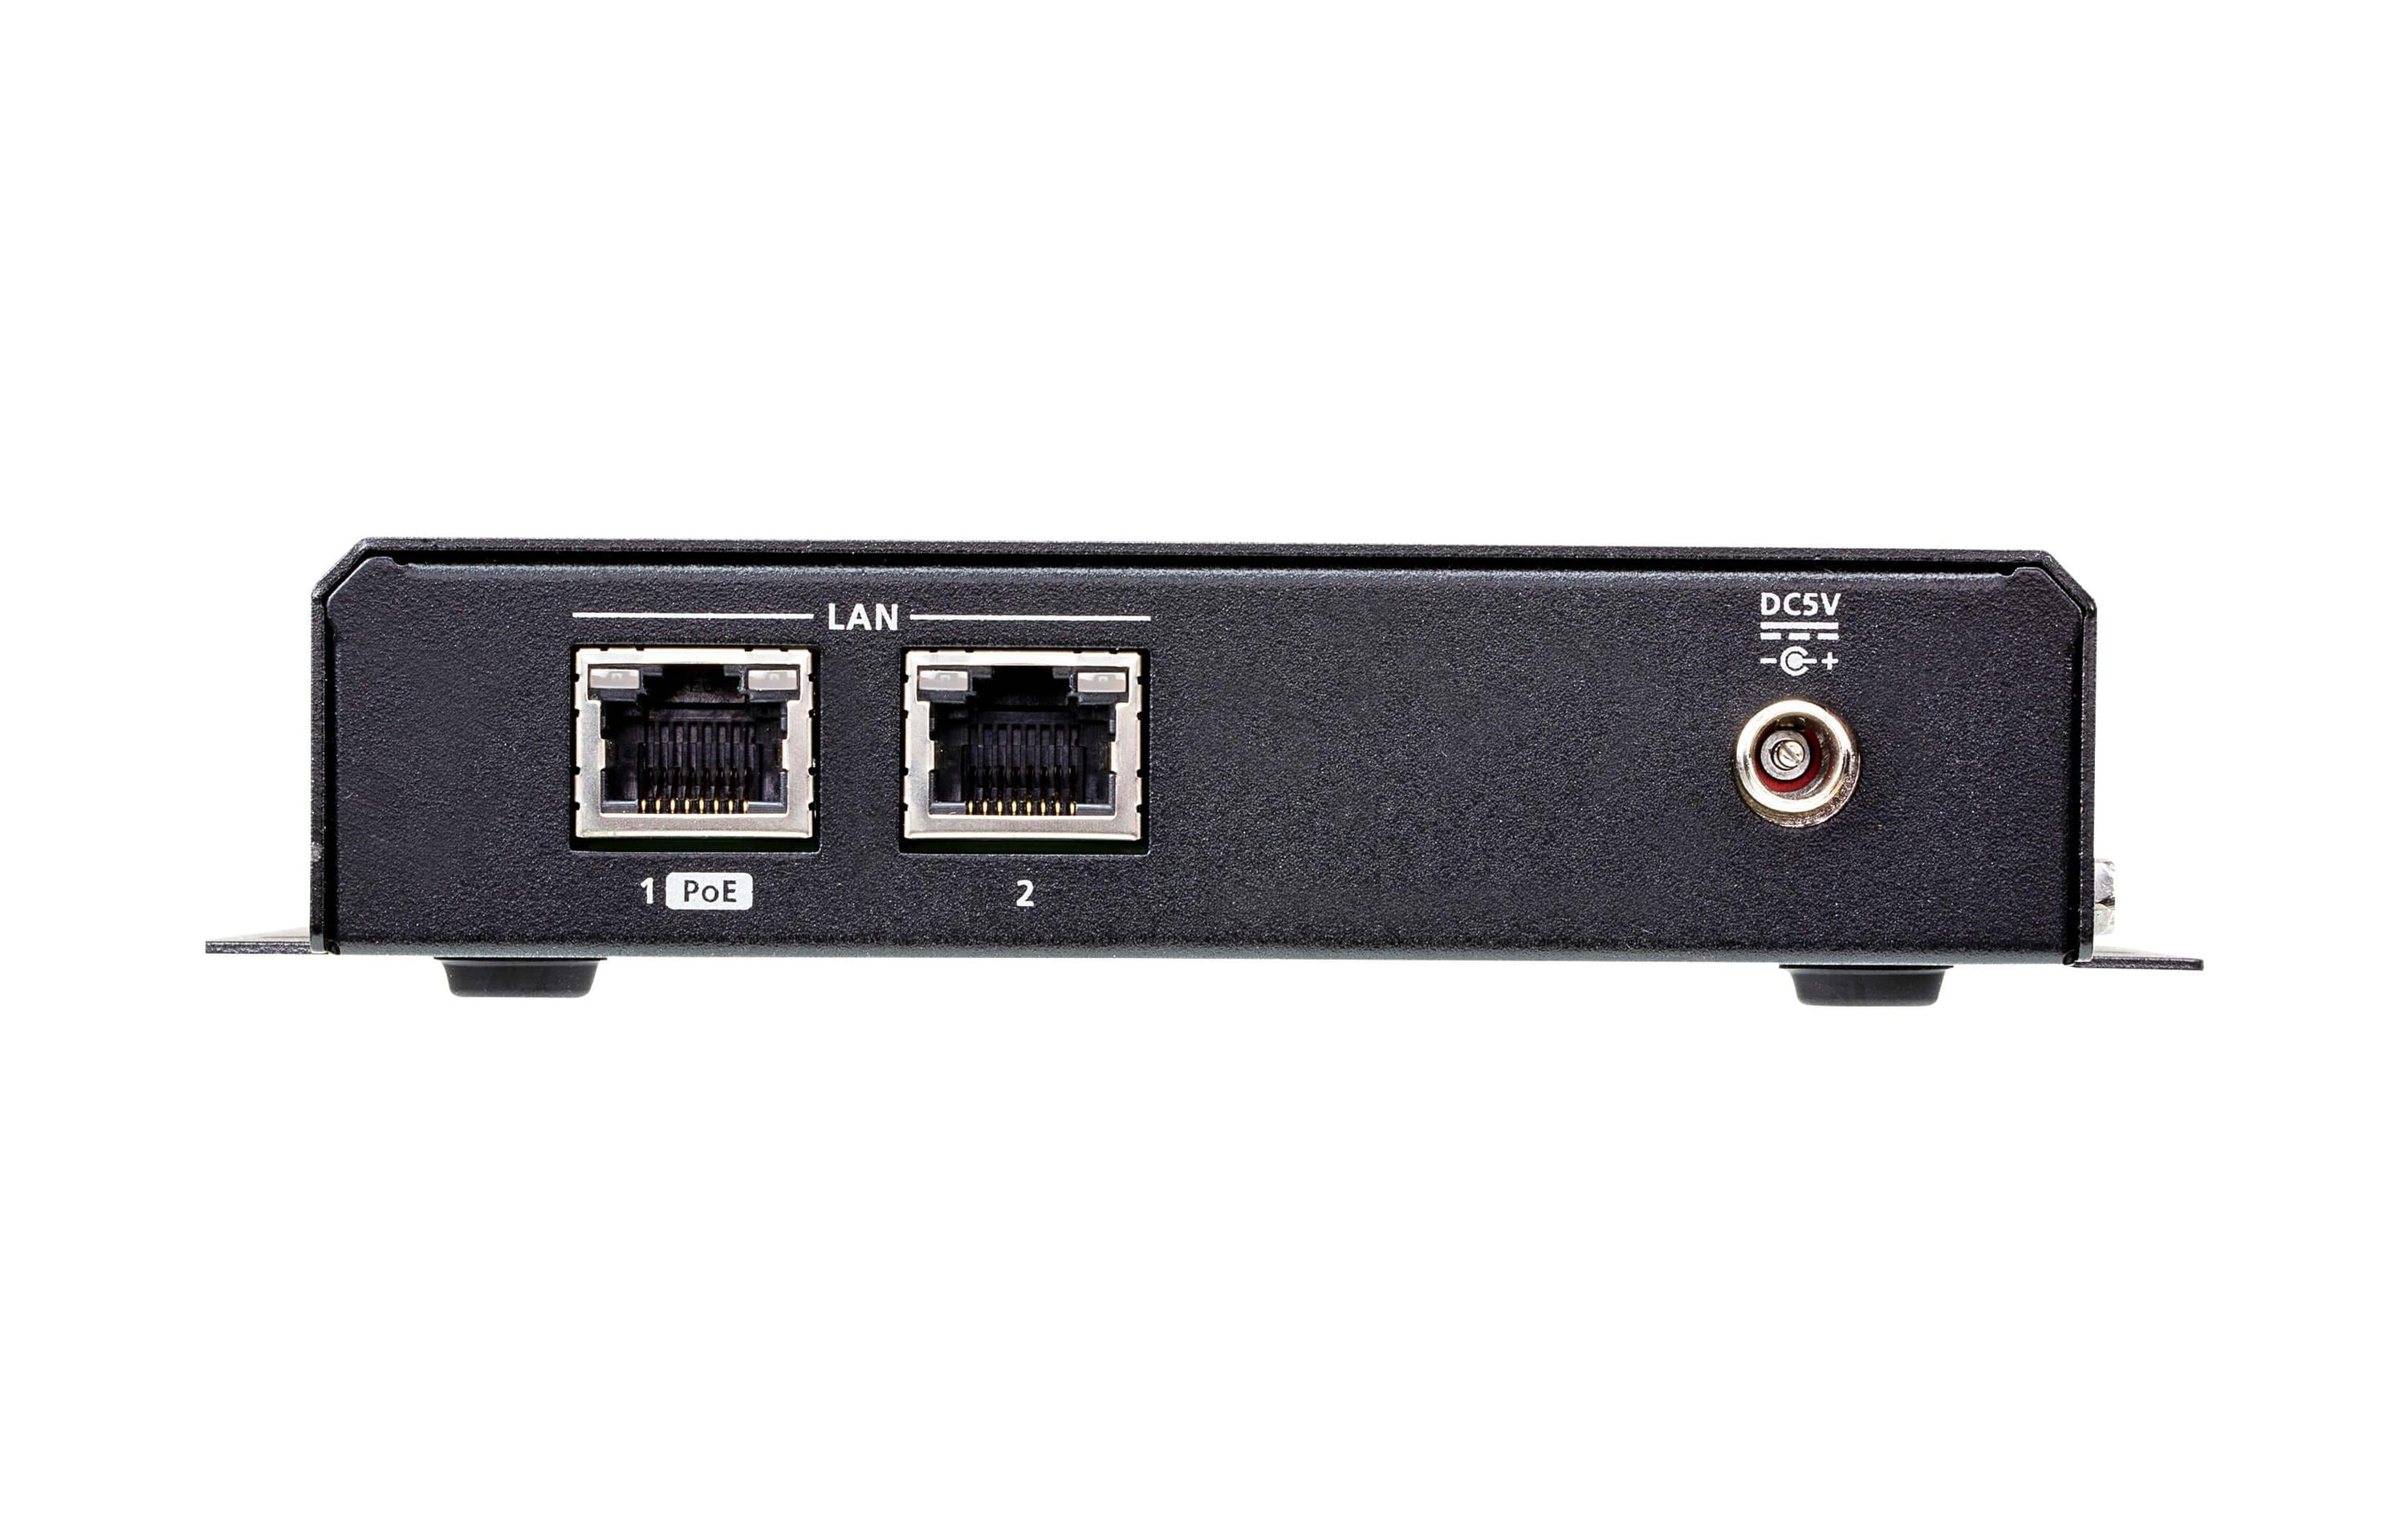 Aten HDMI-Extender 4K VE8952R Receiver